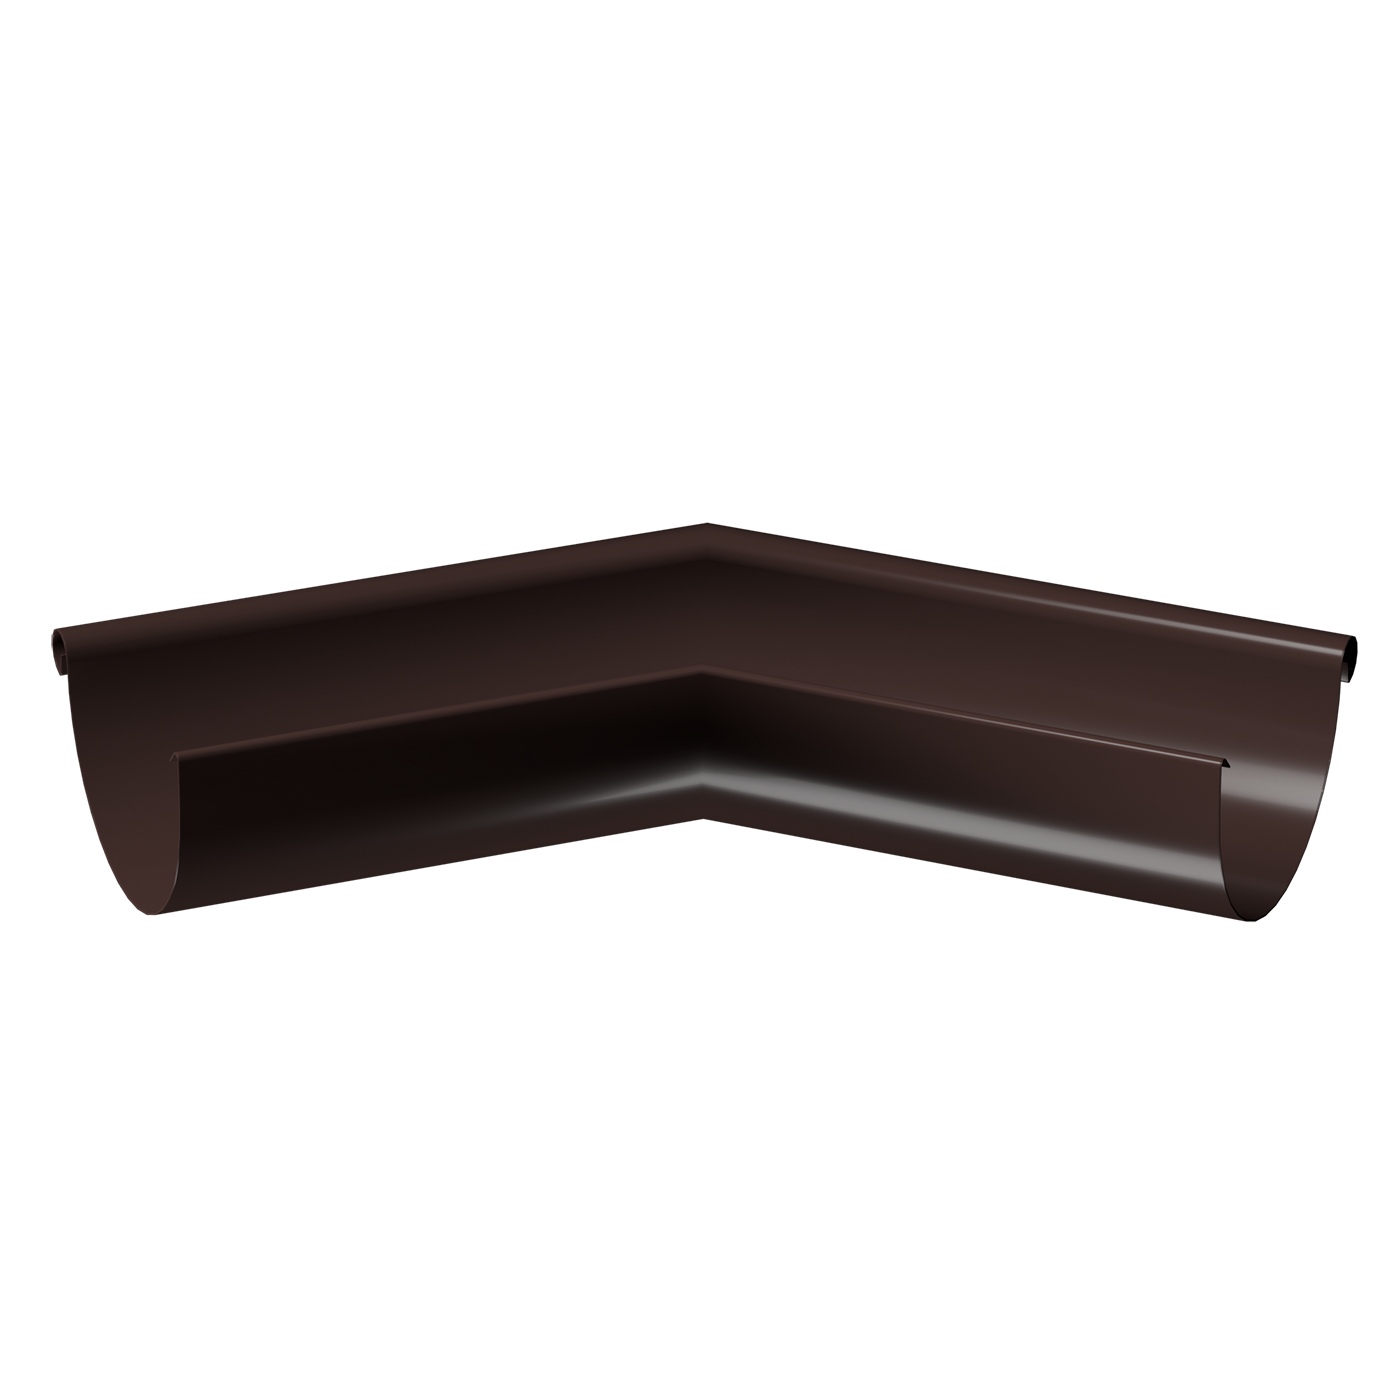 Заказать Внешний угол желоба 135˚ Stal Premium, шоколад